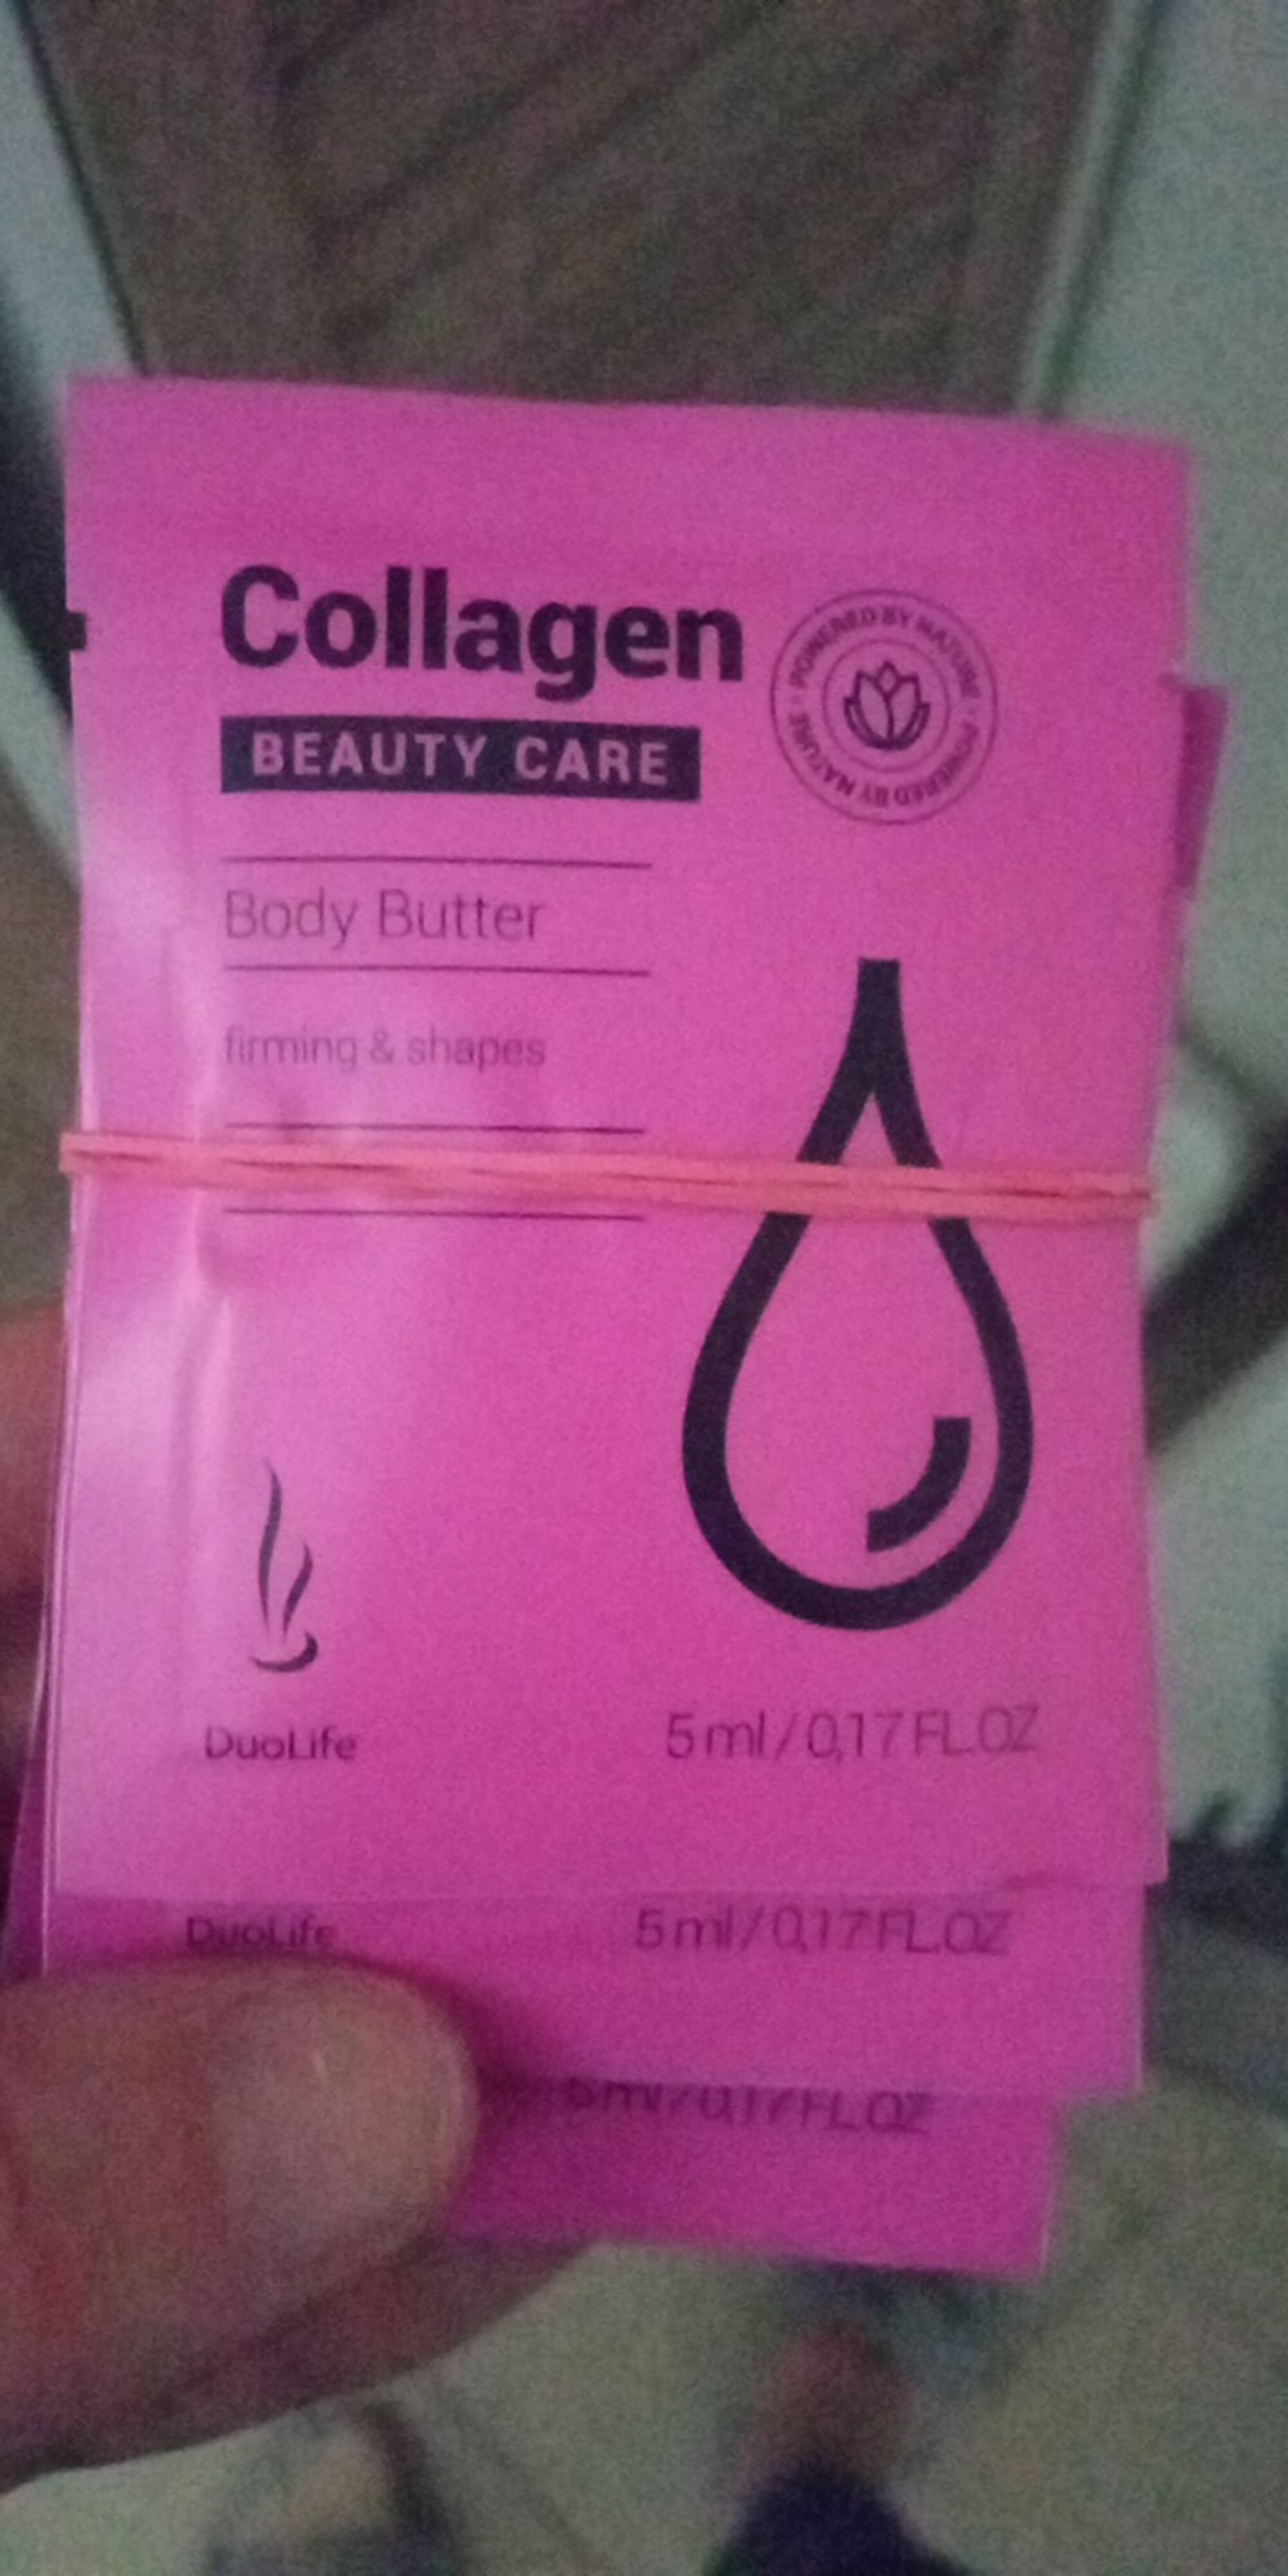 DUOLIFE - Collagen beauty care - Body butter